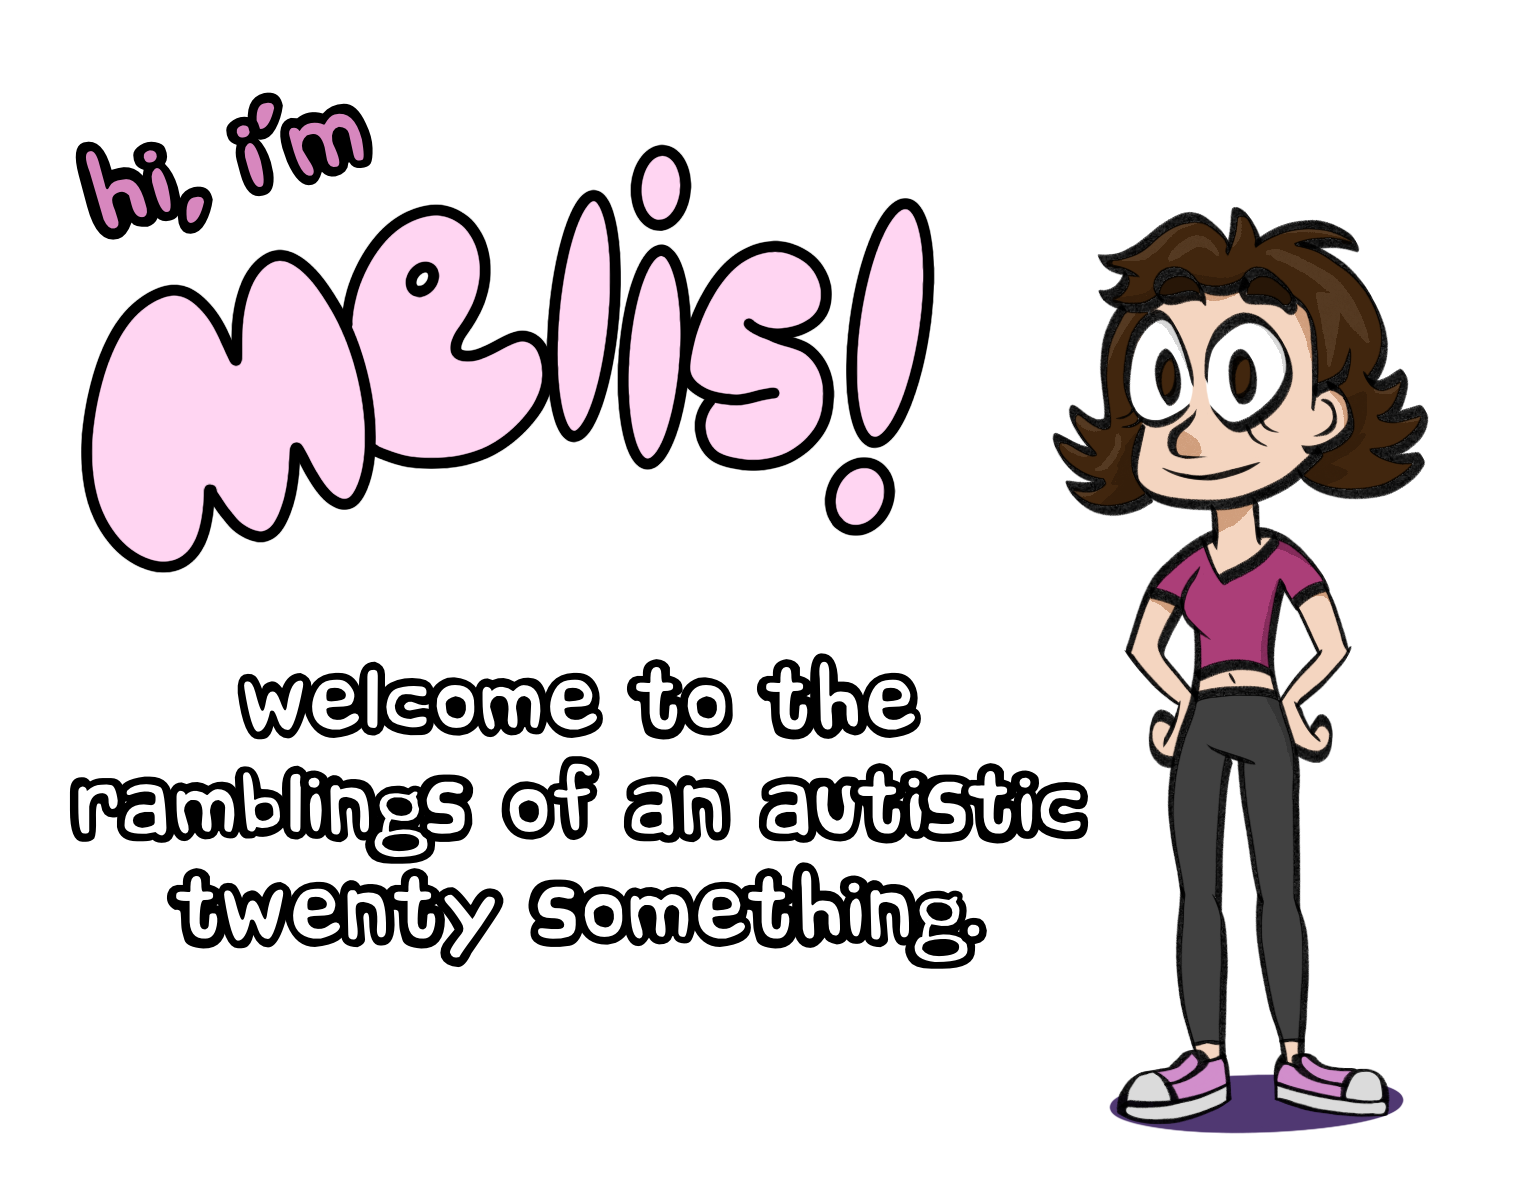 hi, i'm melis! welcome to the ramblings of an autistic twenty something.